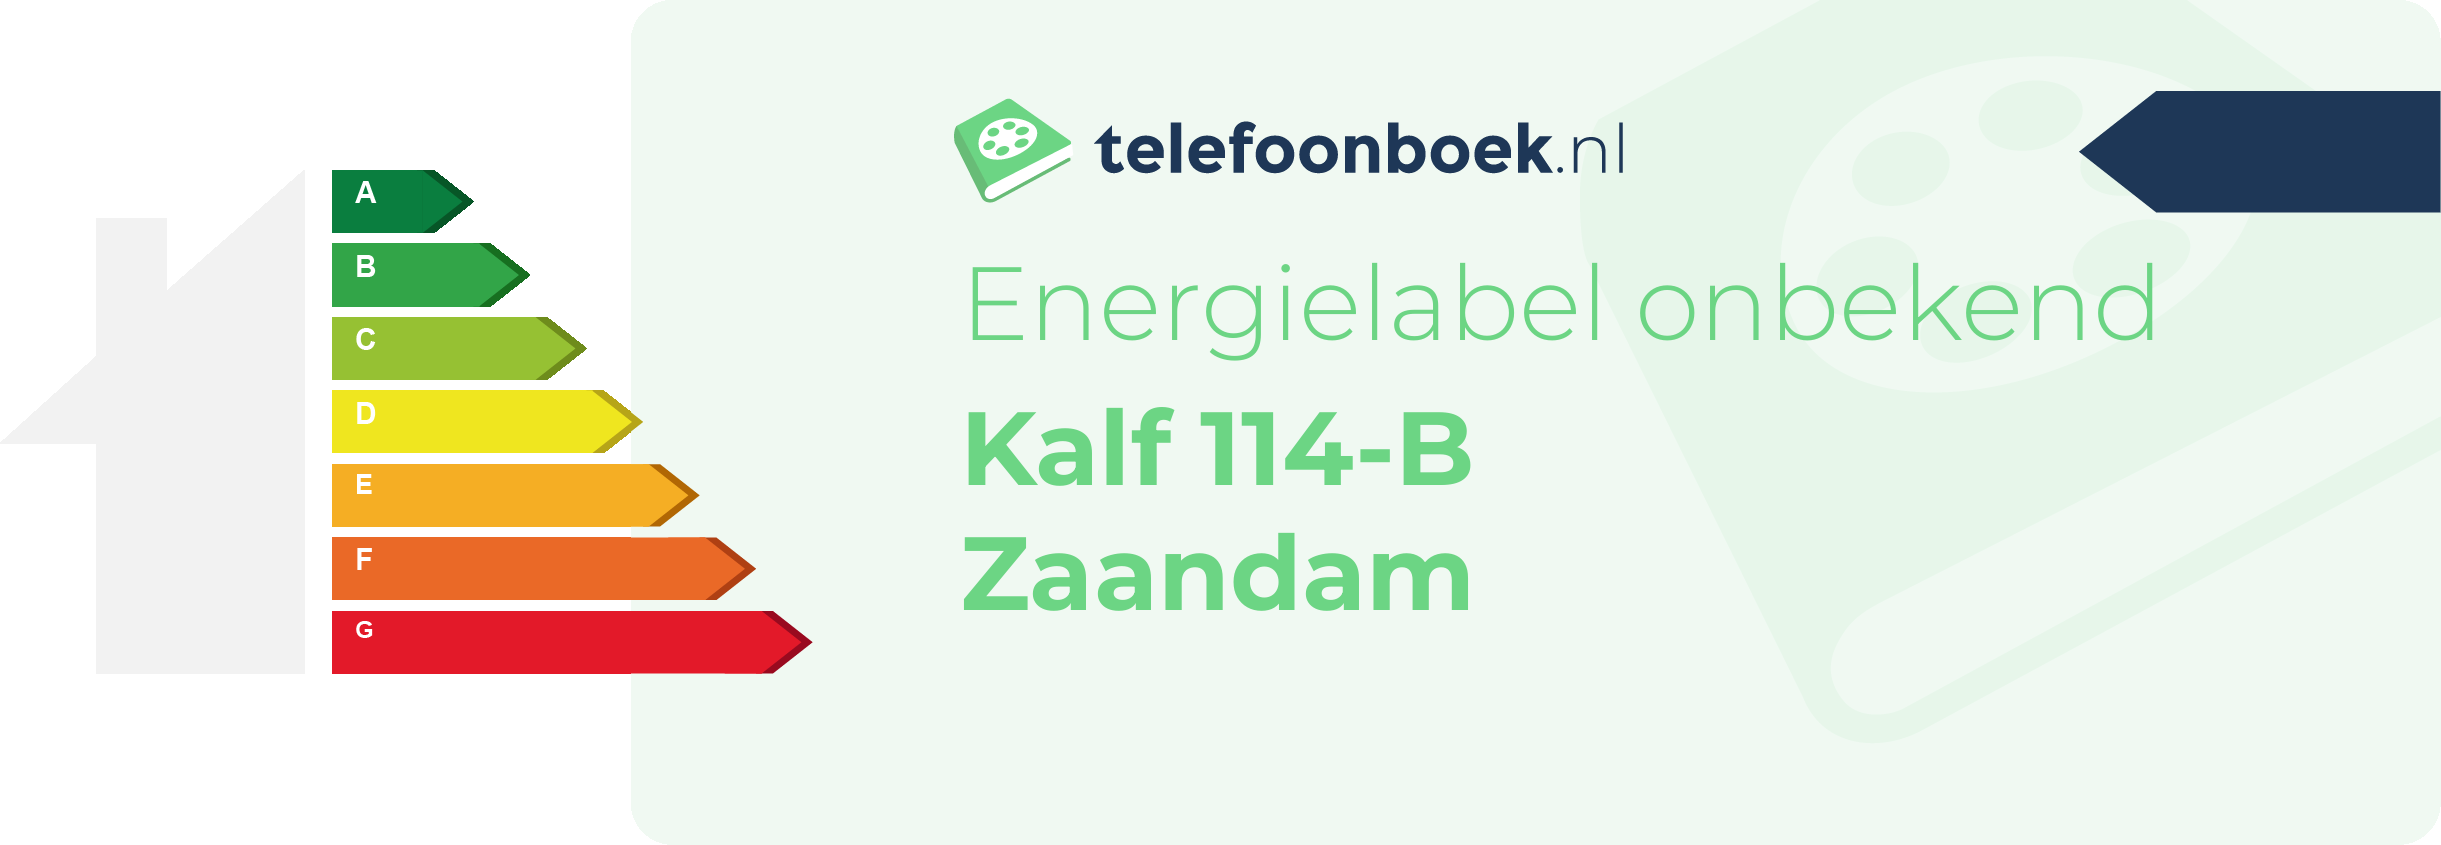 Energielabel Kalf 114-B Zaandam